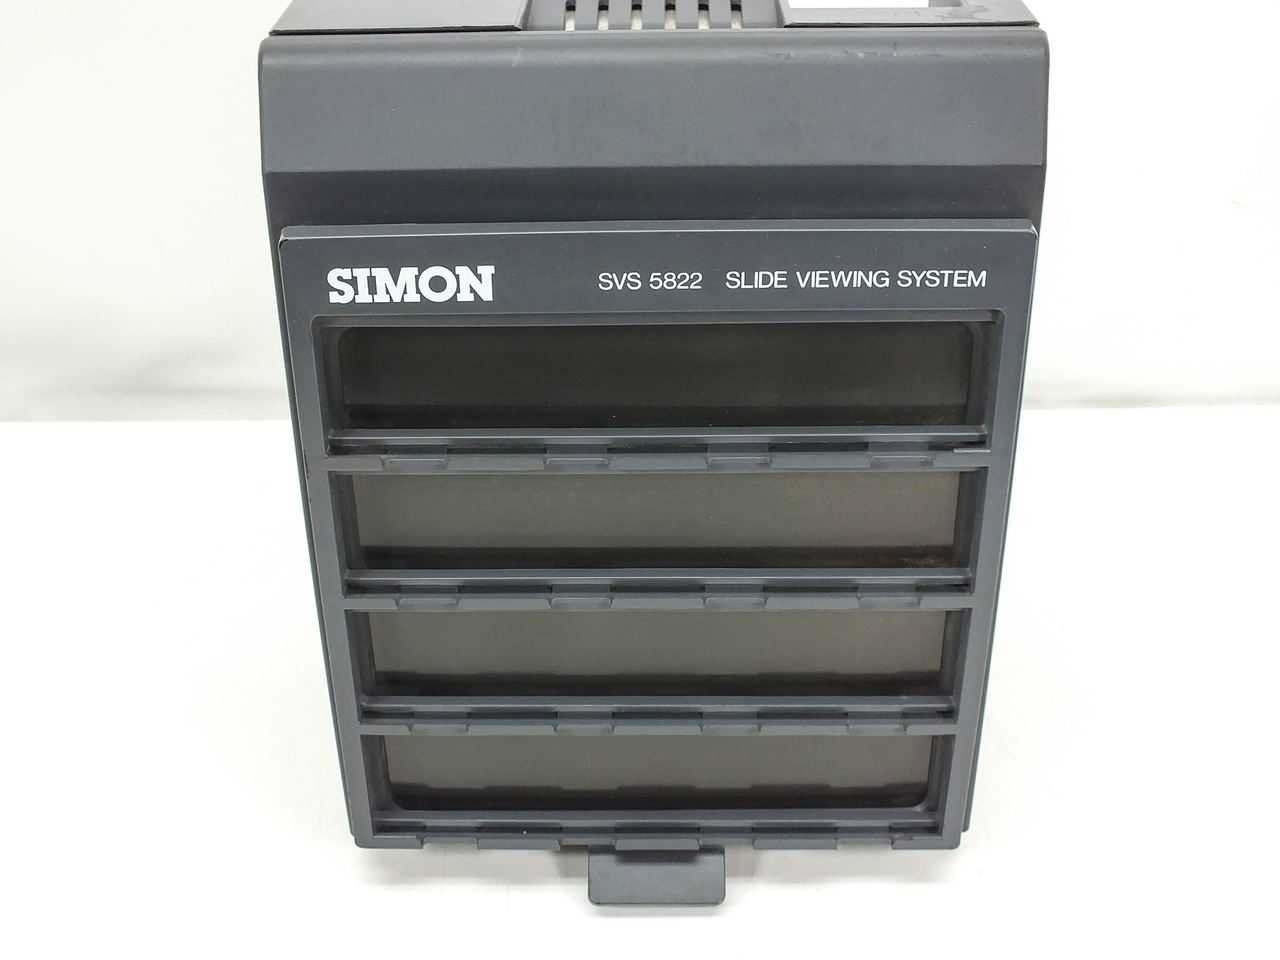 Simon Slide viewing system (SVS 5822)